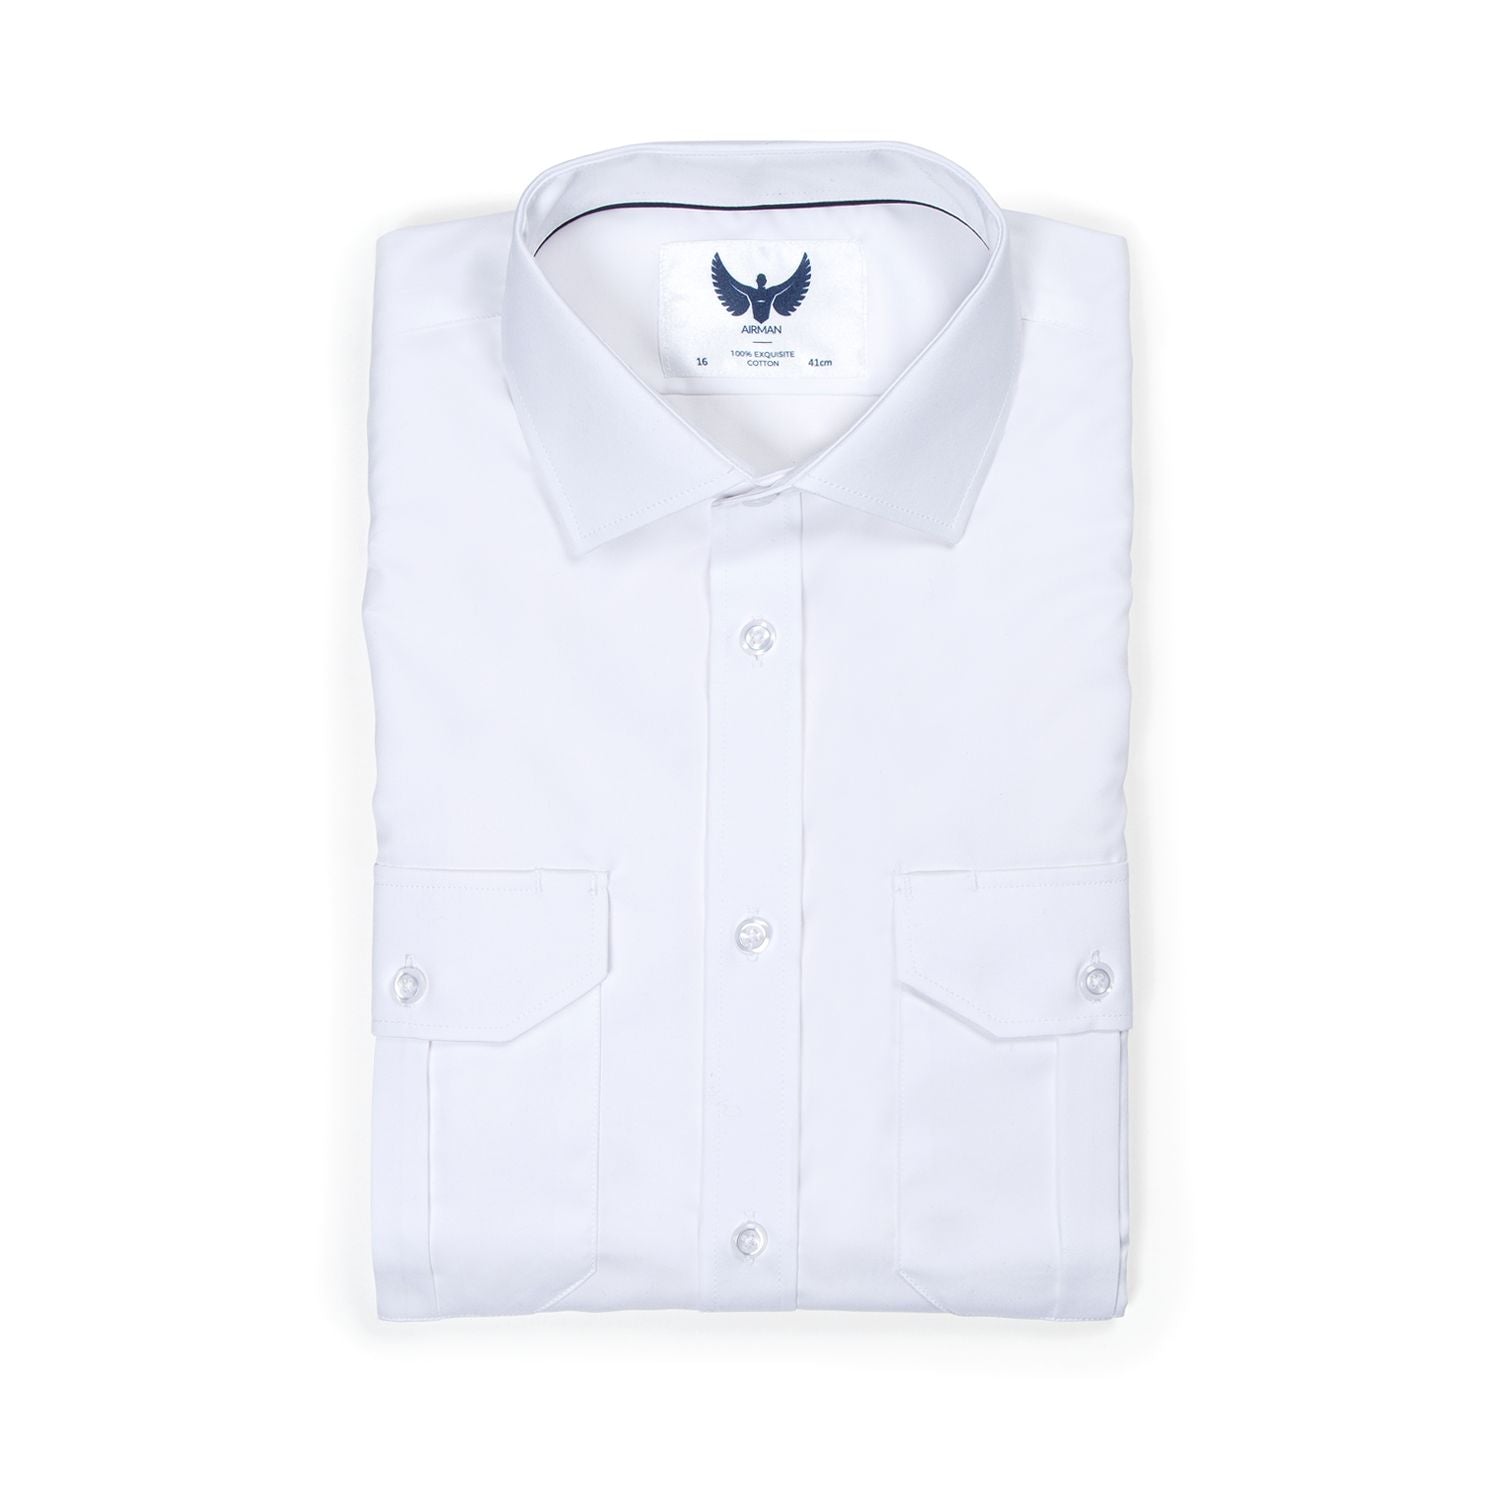 100% cotton pilot shirt